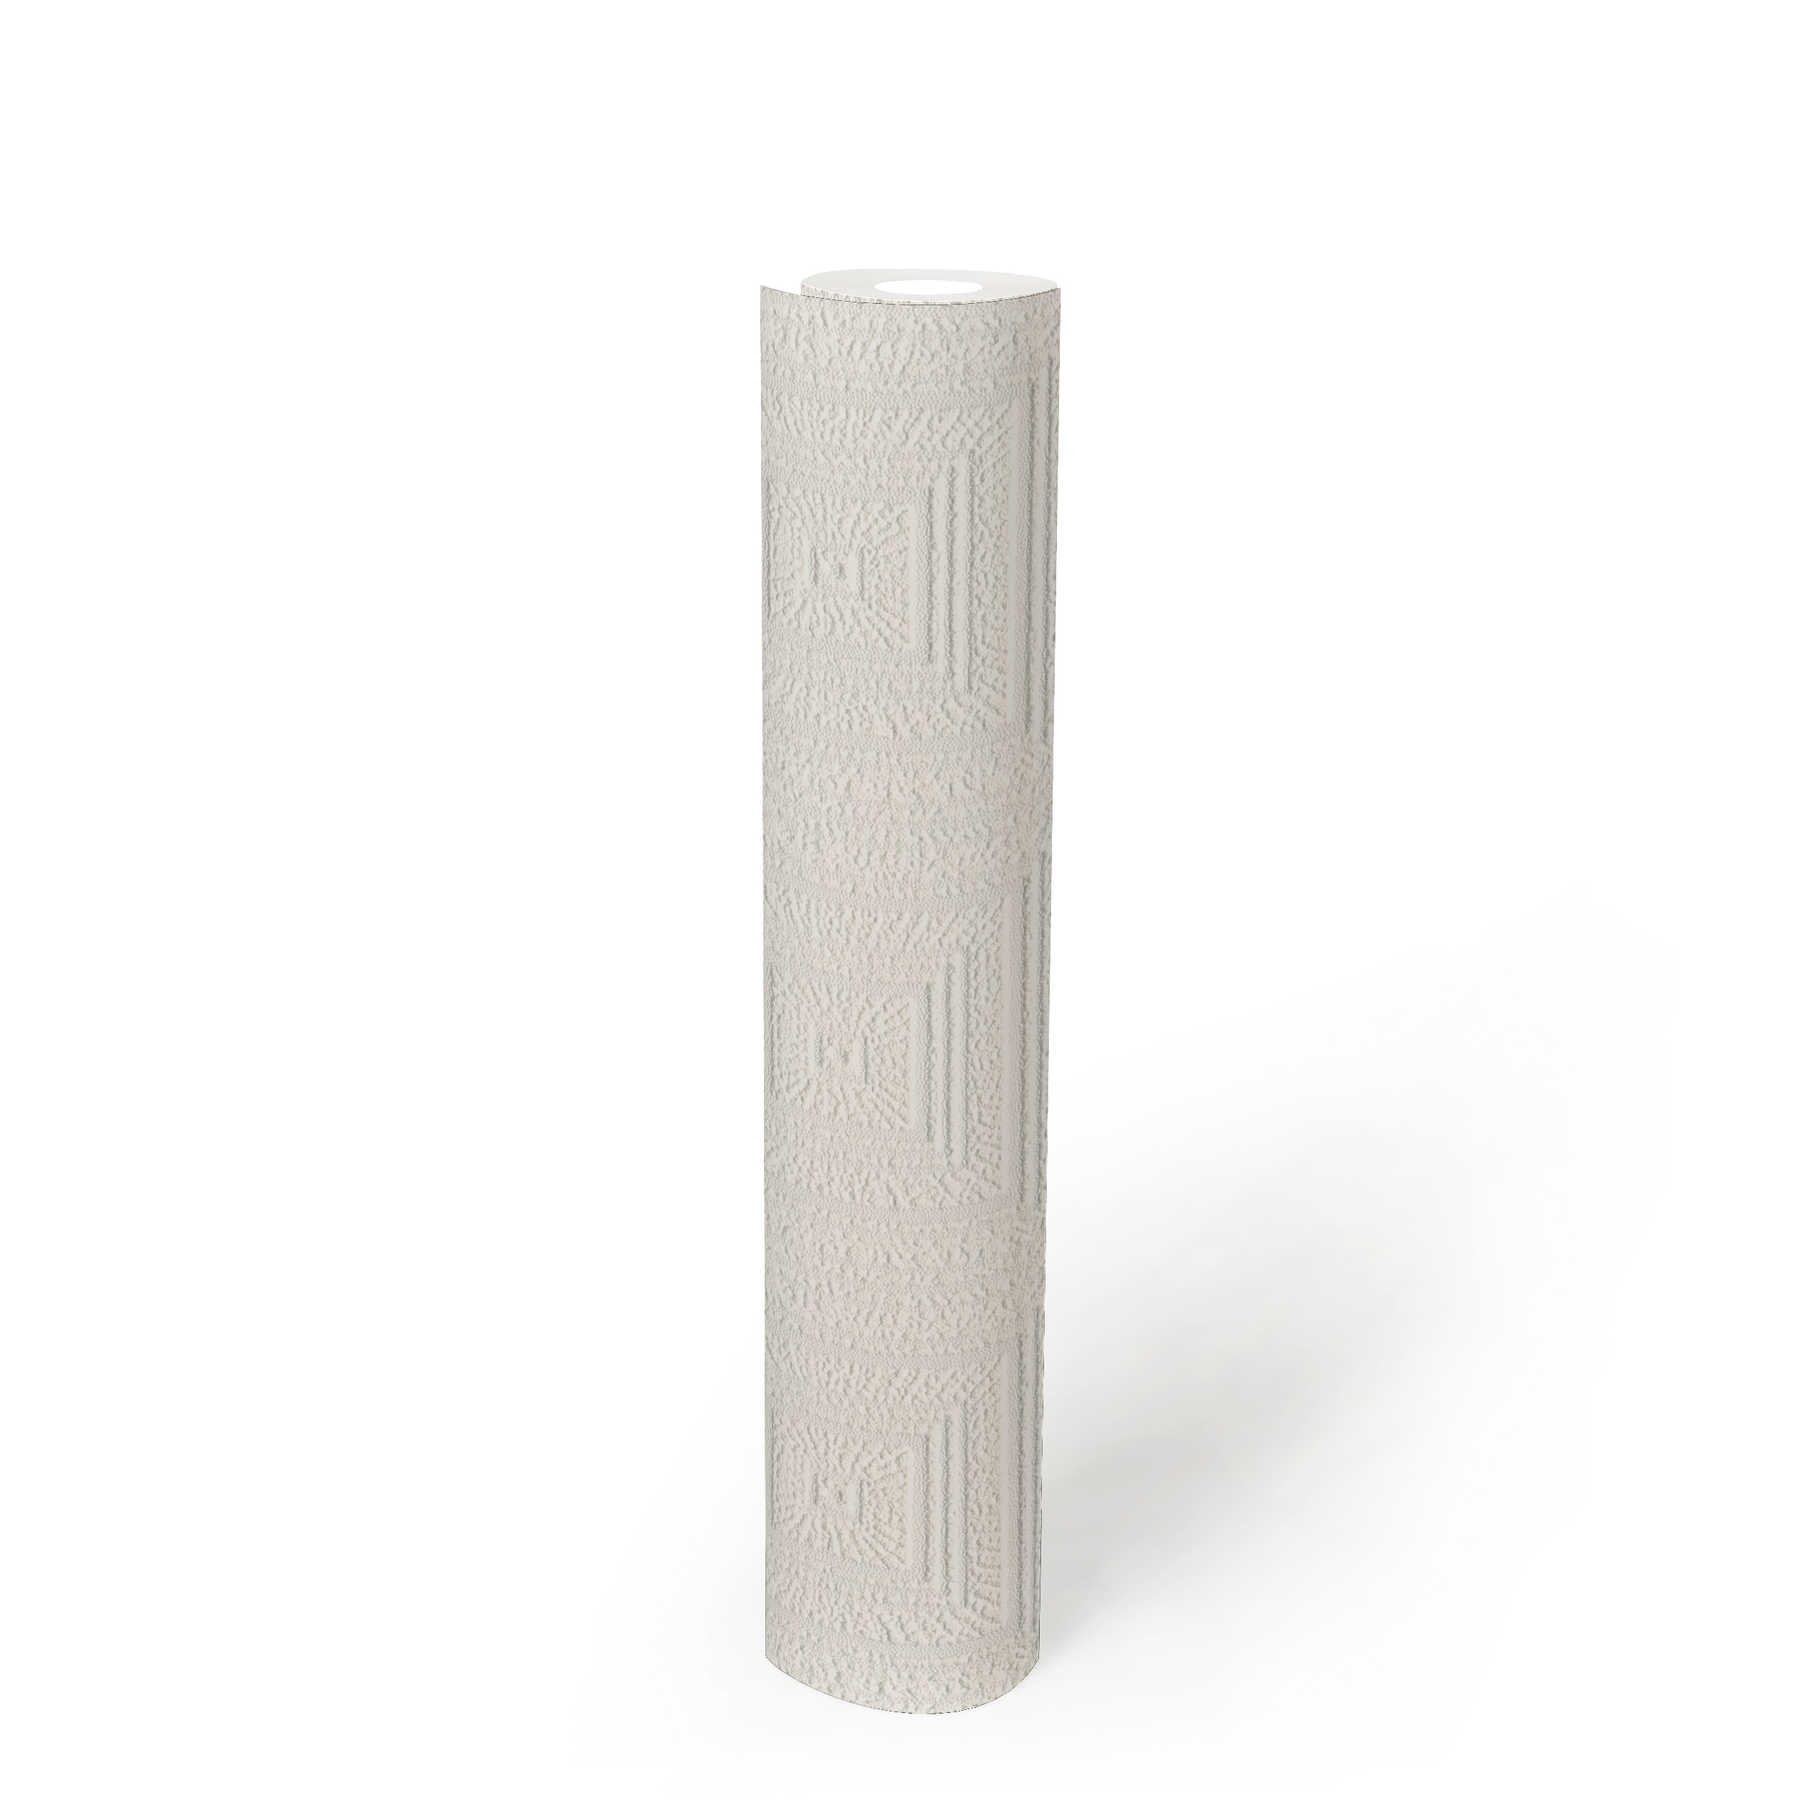             Papiertapete Dekor-Kassetten Struktureffekt & Putzoptik – Weiß
        